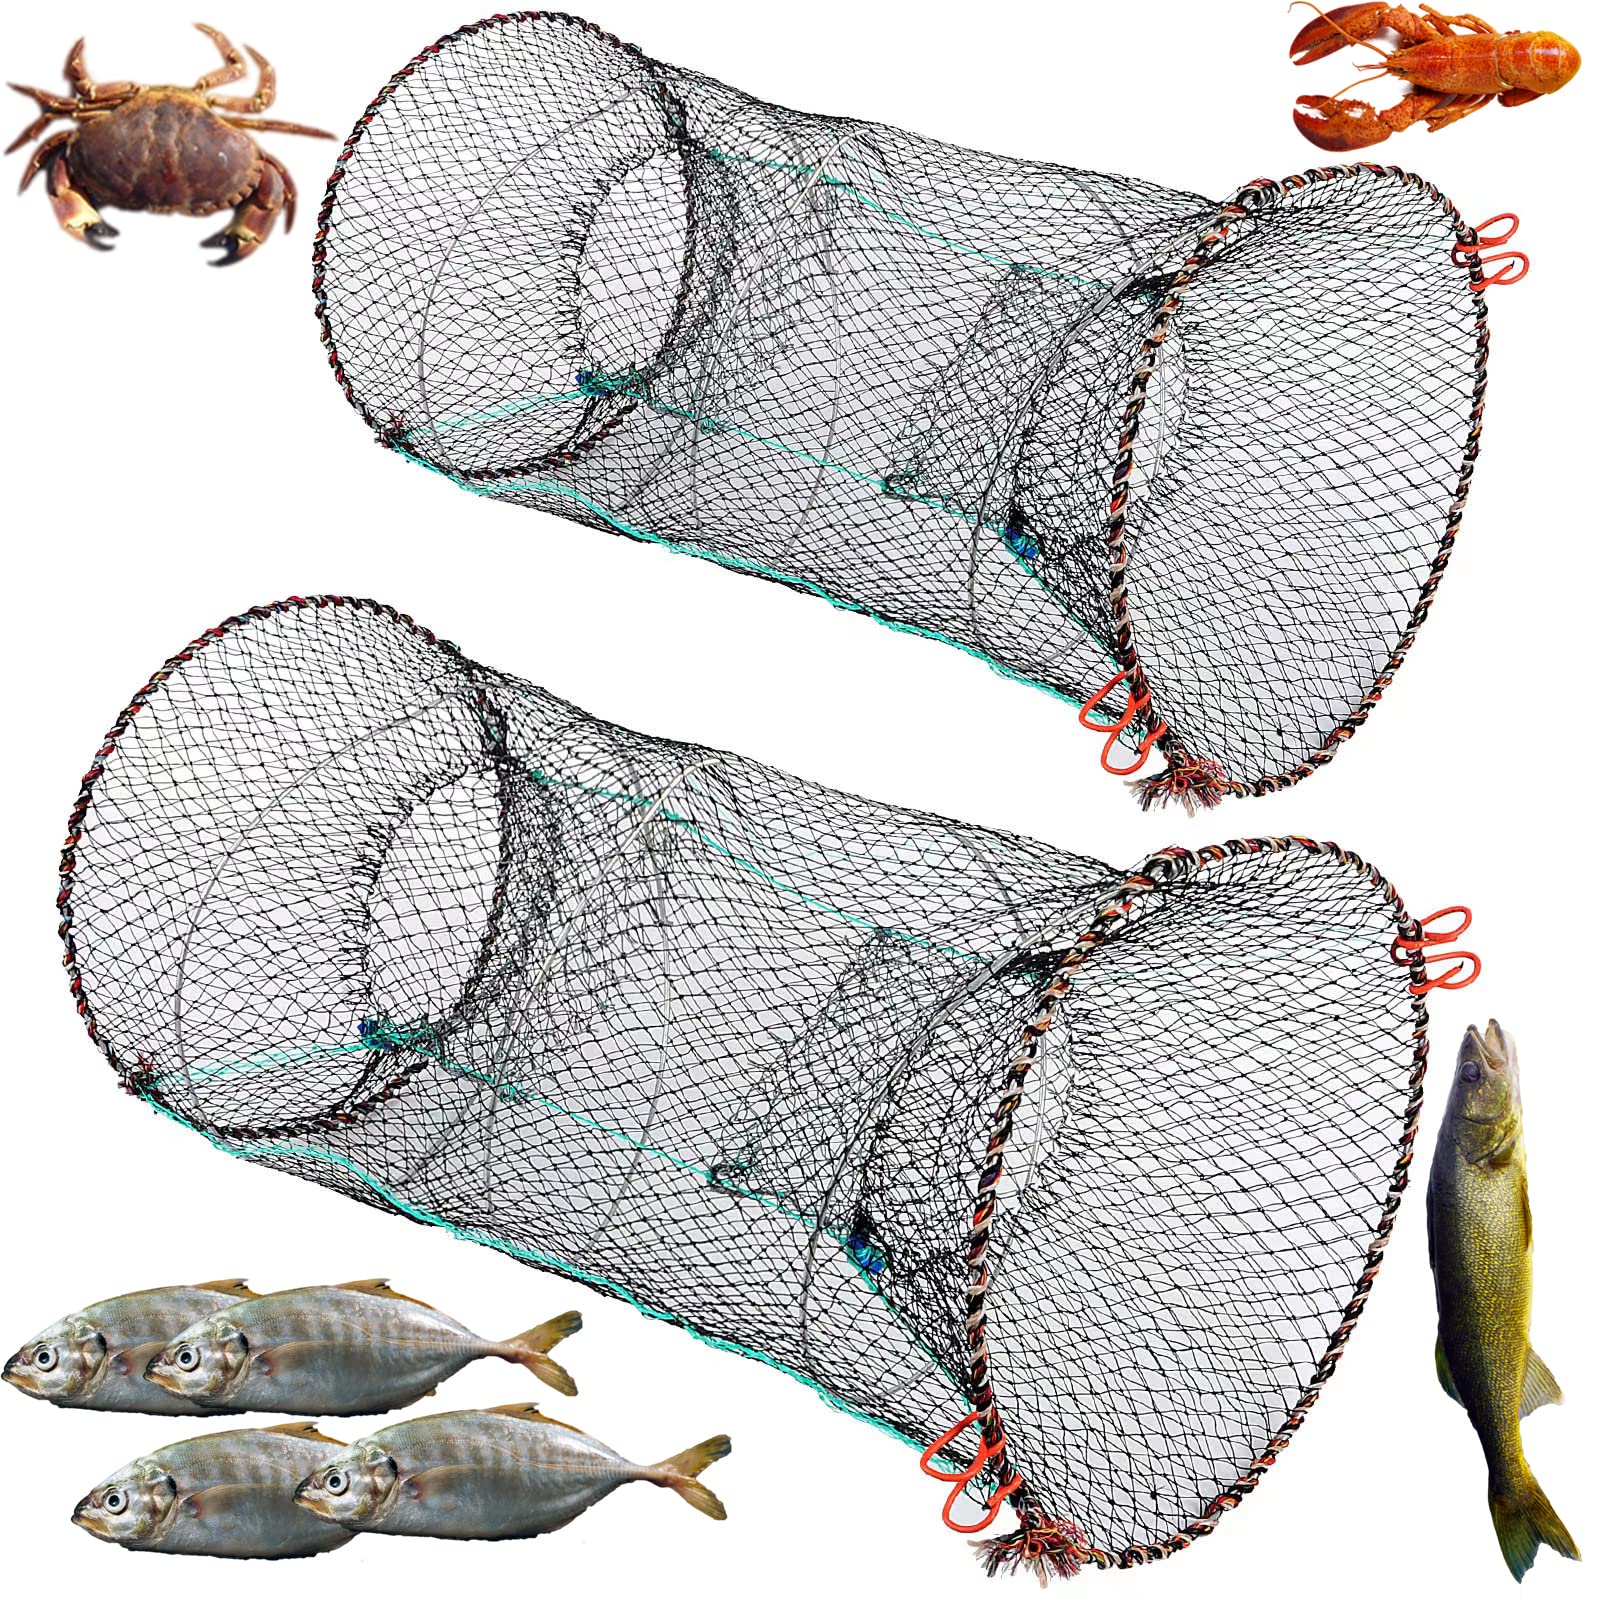 Nswdhy Fishing Bait Trap,2 Packs Crab Trap Minnow Trap Crawfish